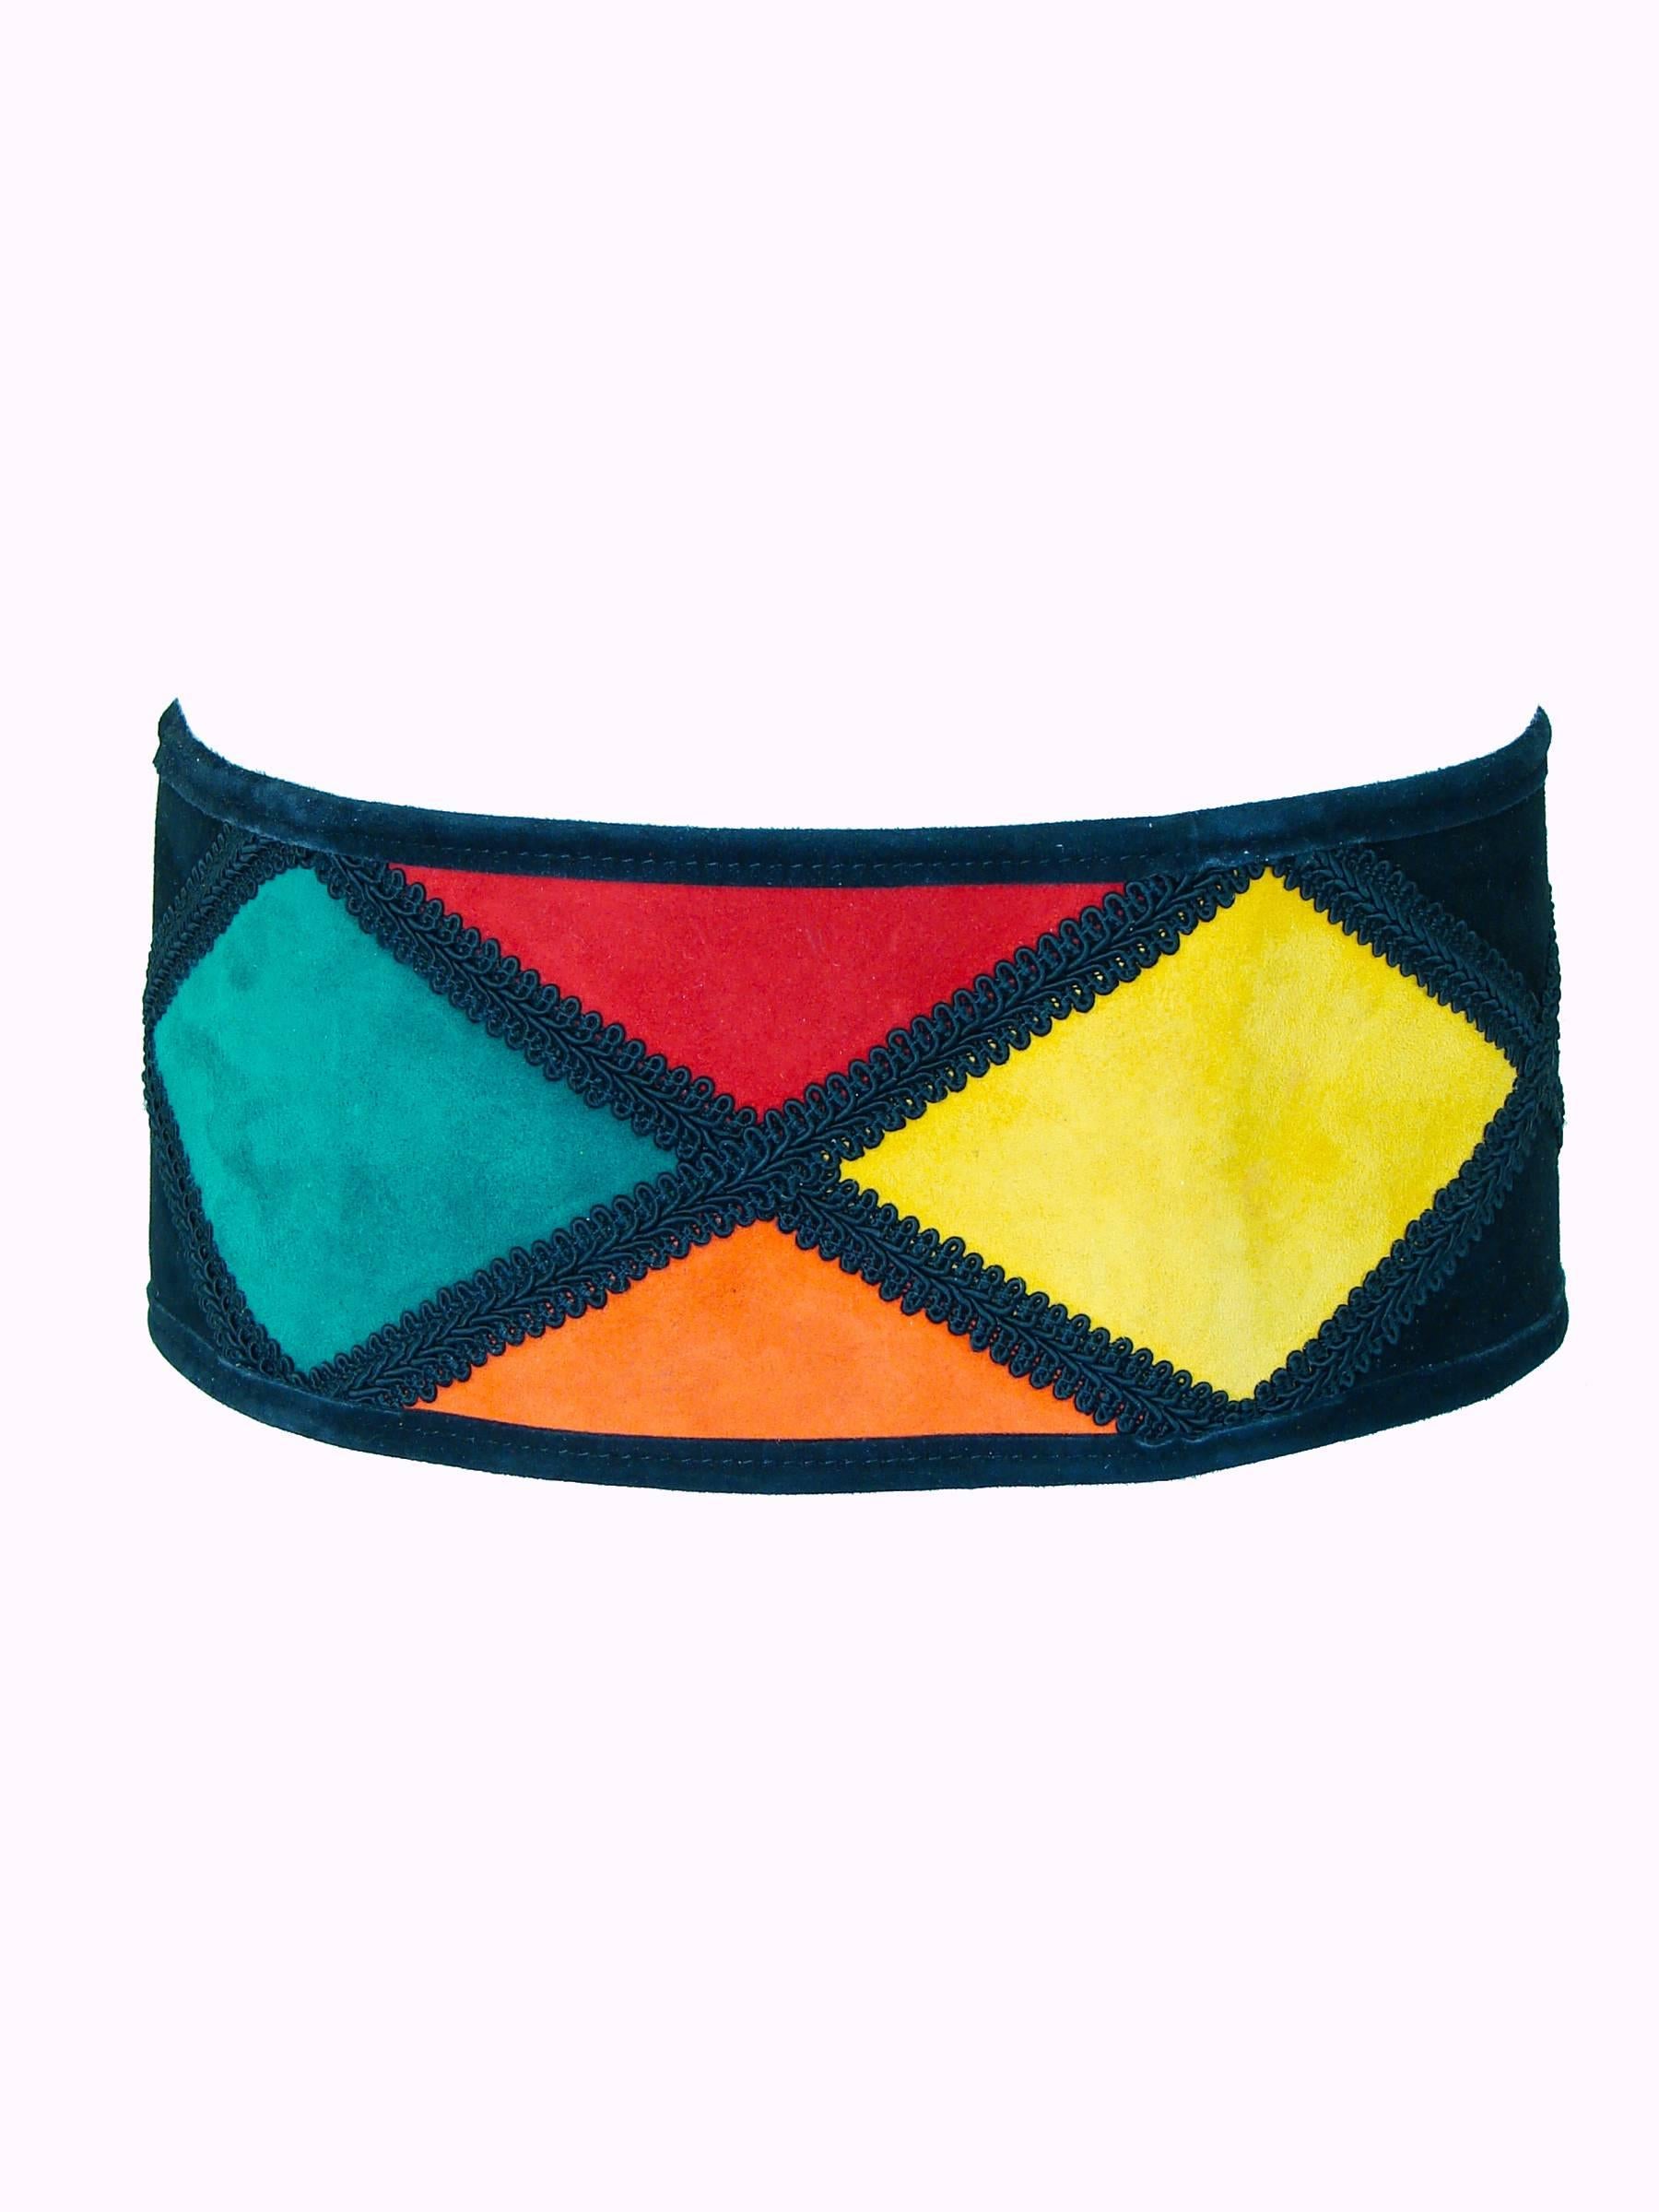 moschino colorful belt